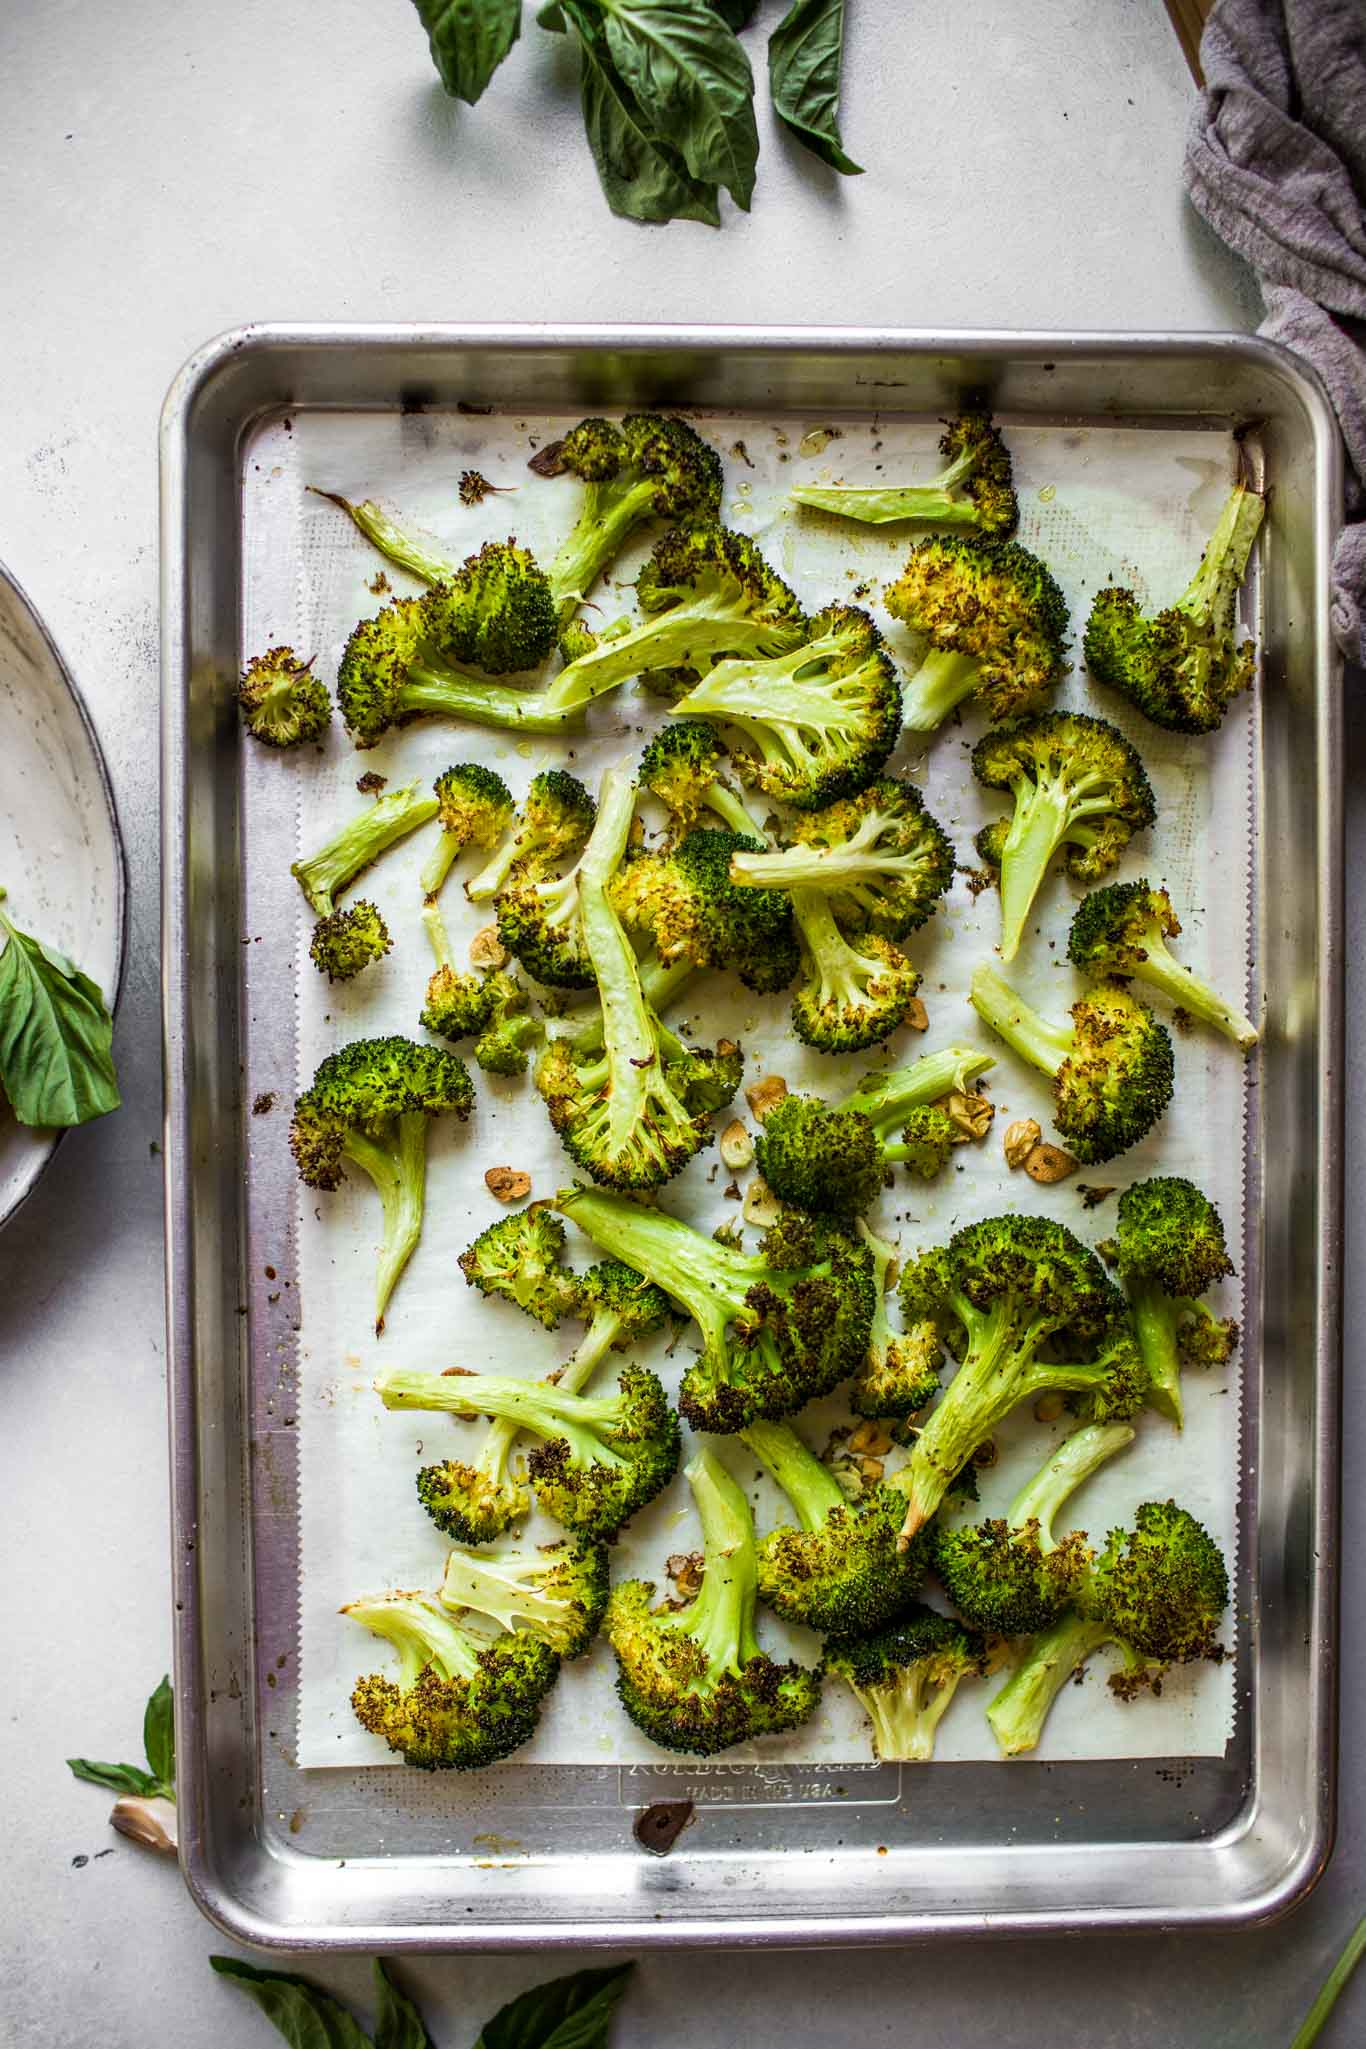 Sheet pan of roasted broccoli with garlic. 